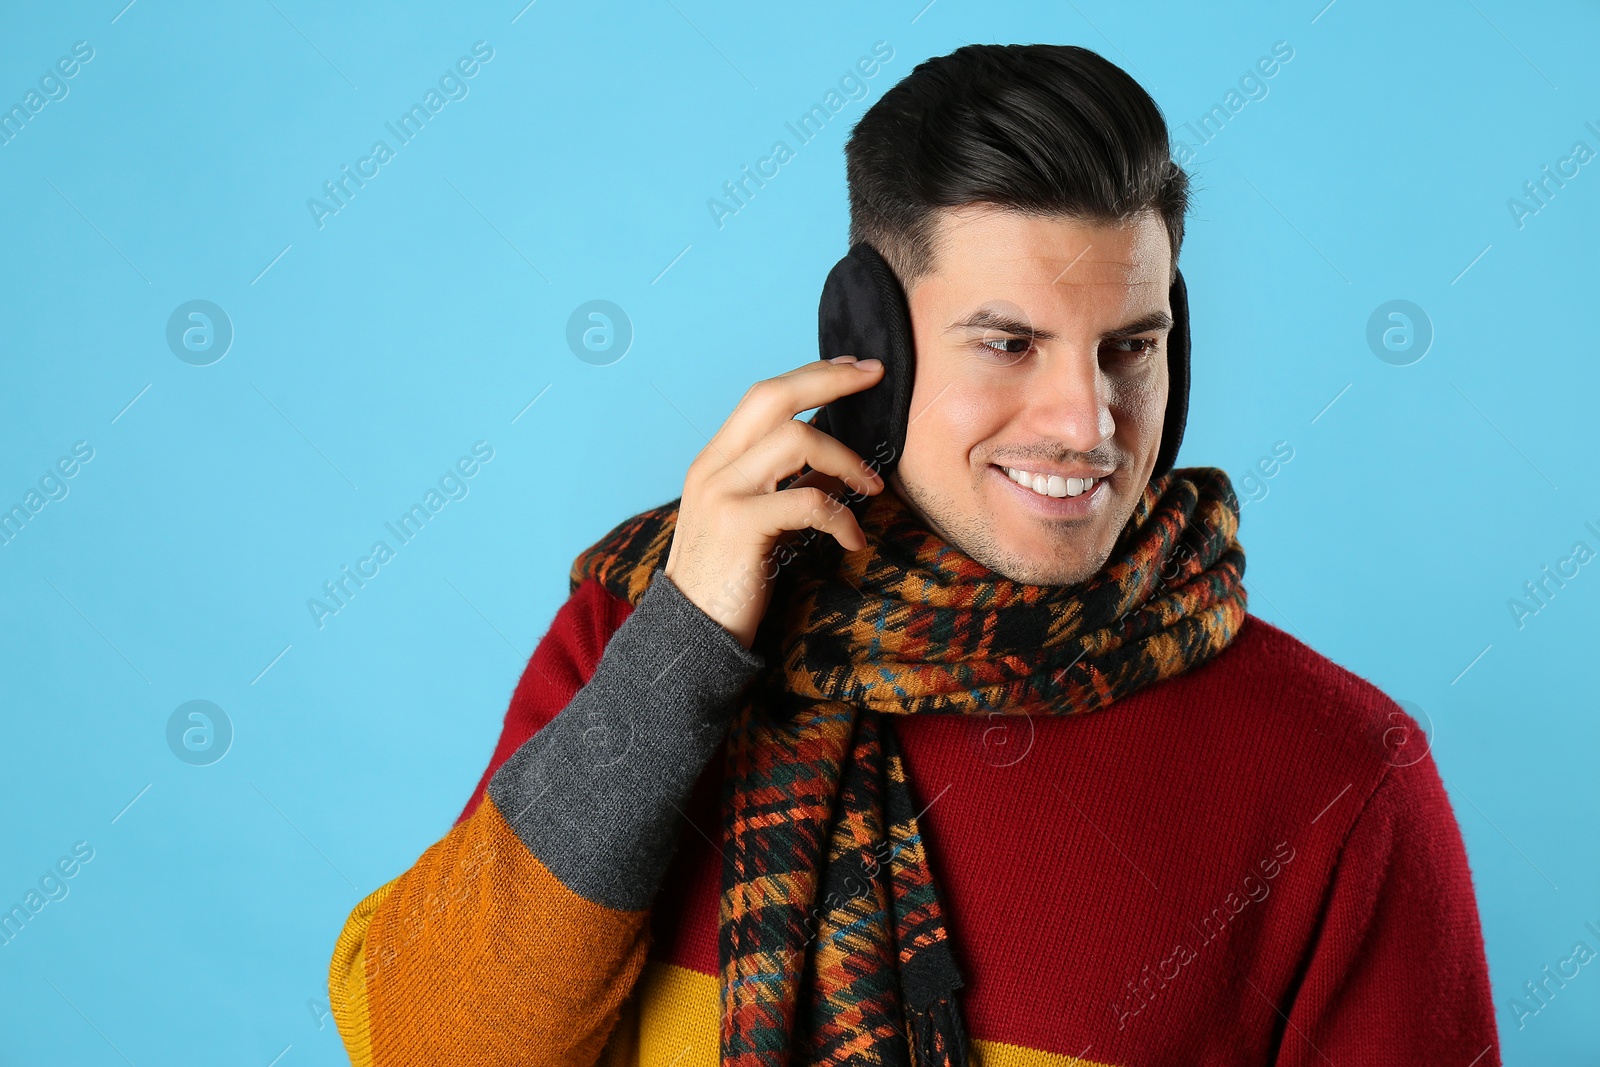 Photo of Man wearing stylish earmuffs and scarf on light blue background